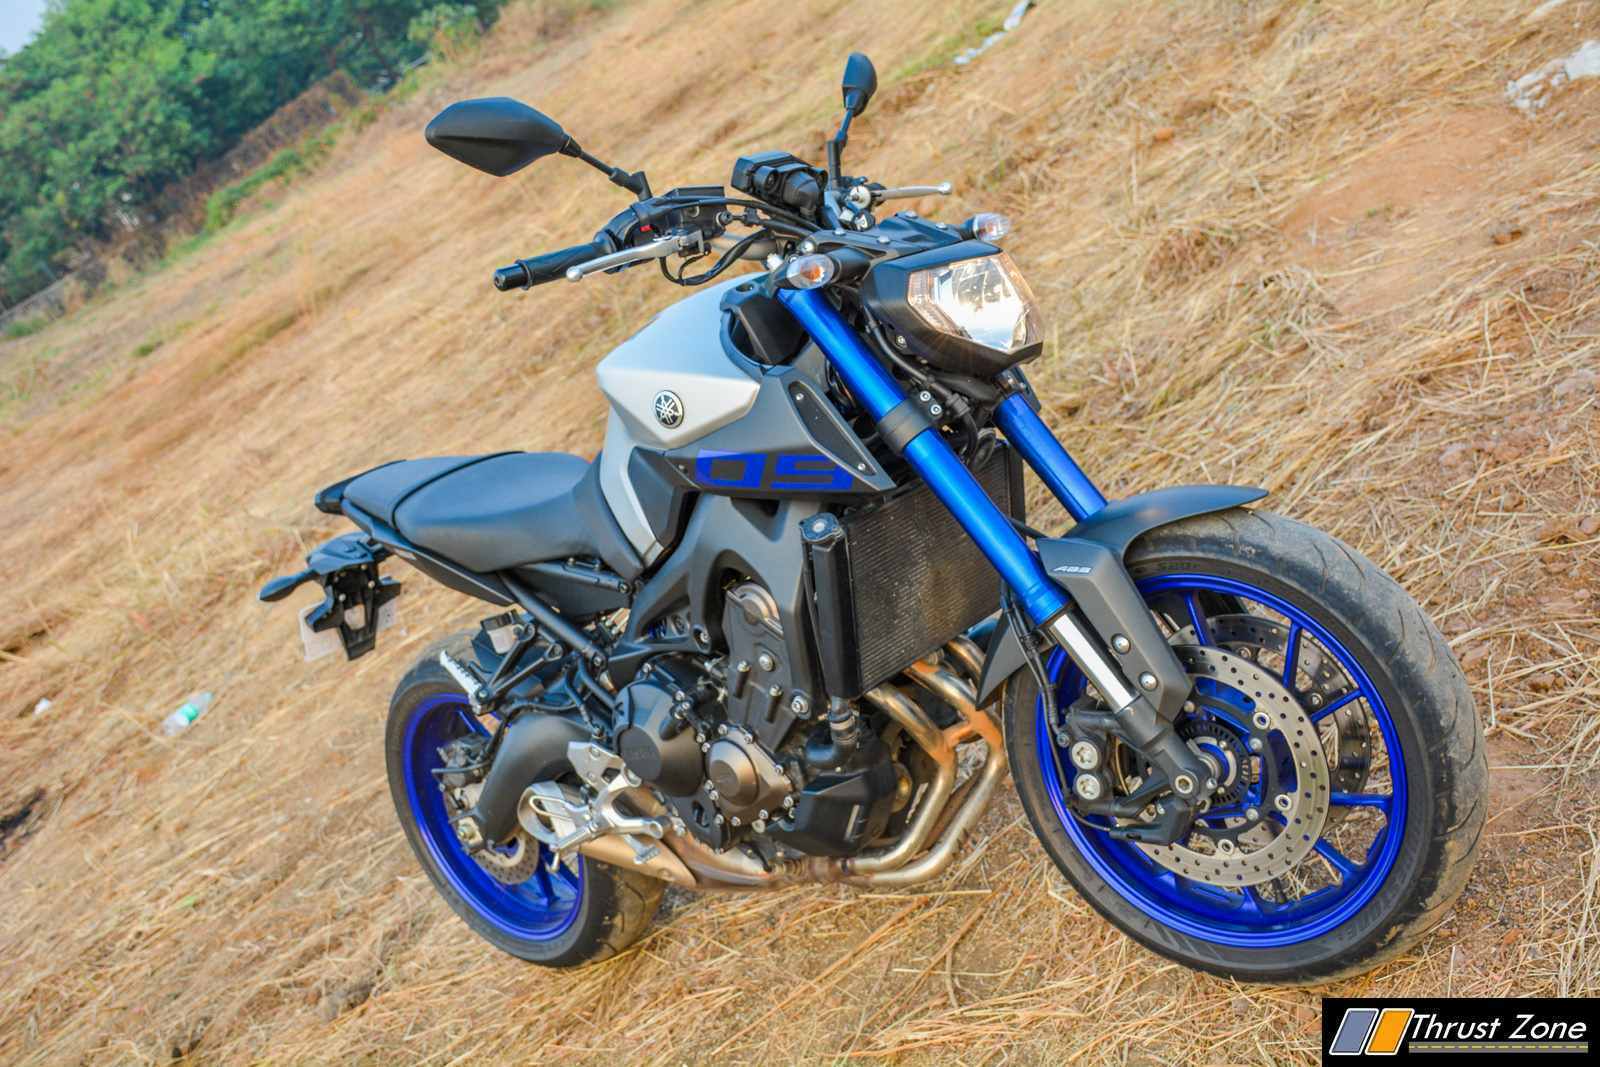 https://www.thrustzone.com/wp-content/uploads/2017/11/Yamaha-MT-09-India-Ride-Review-31.jpg